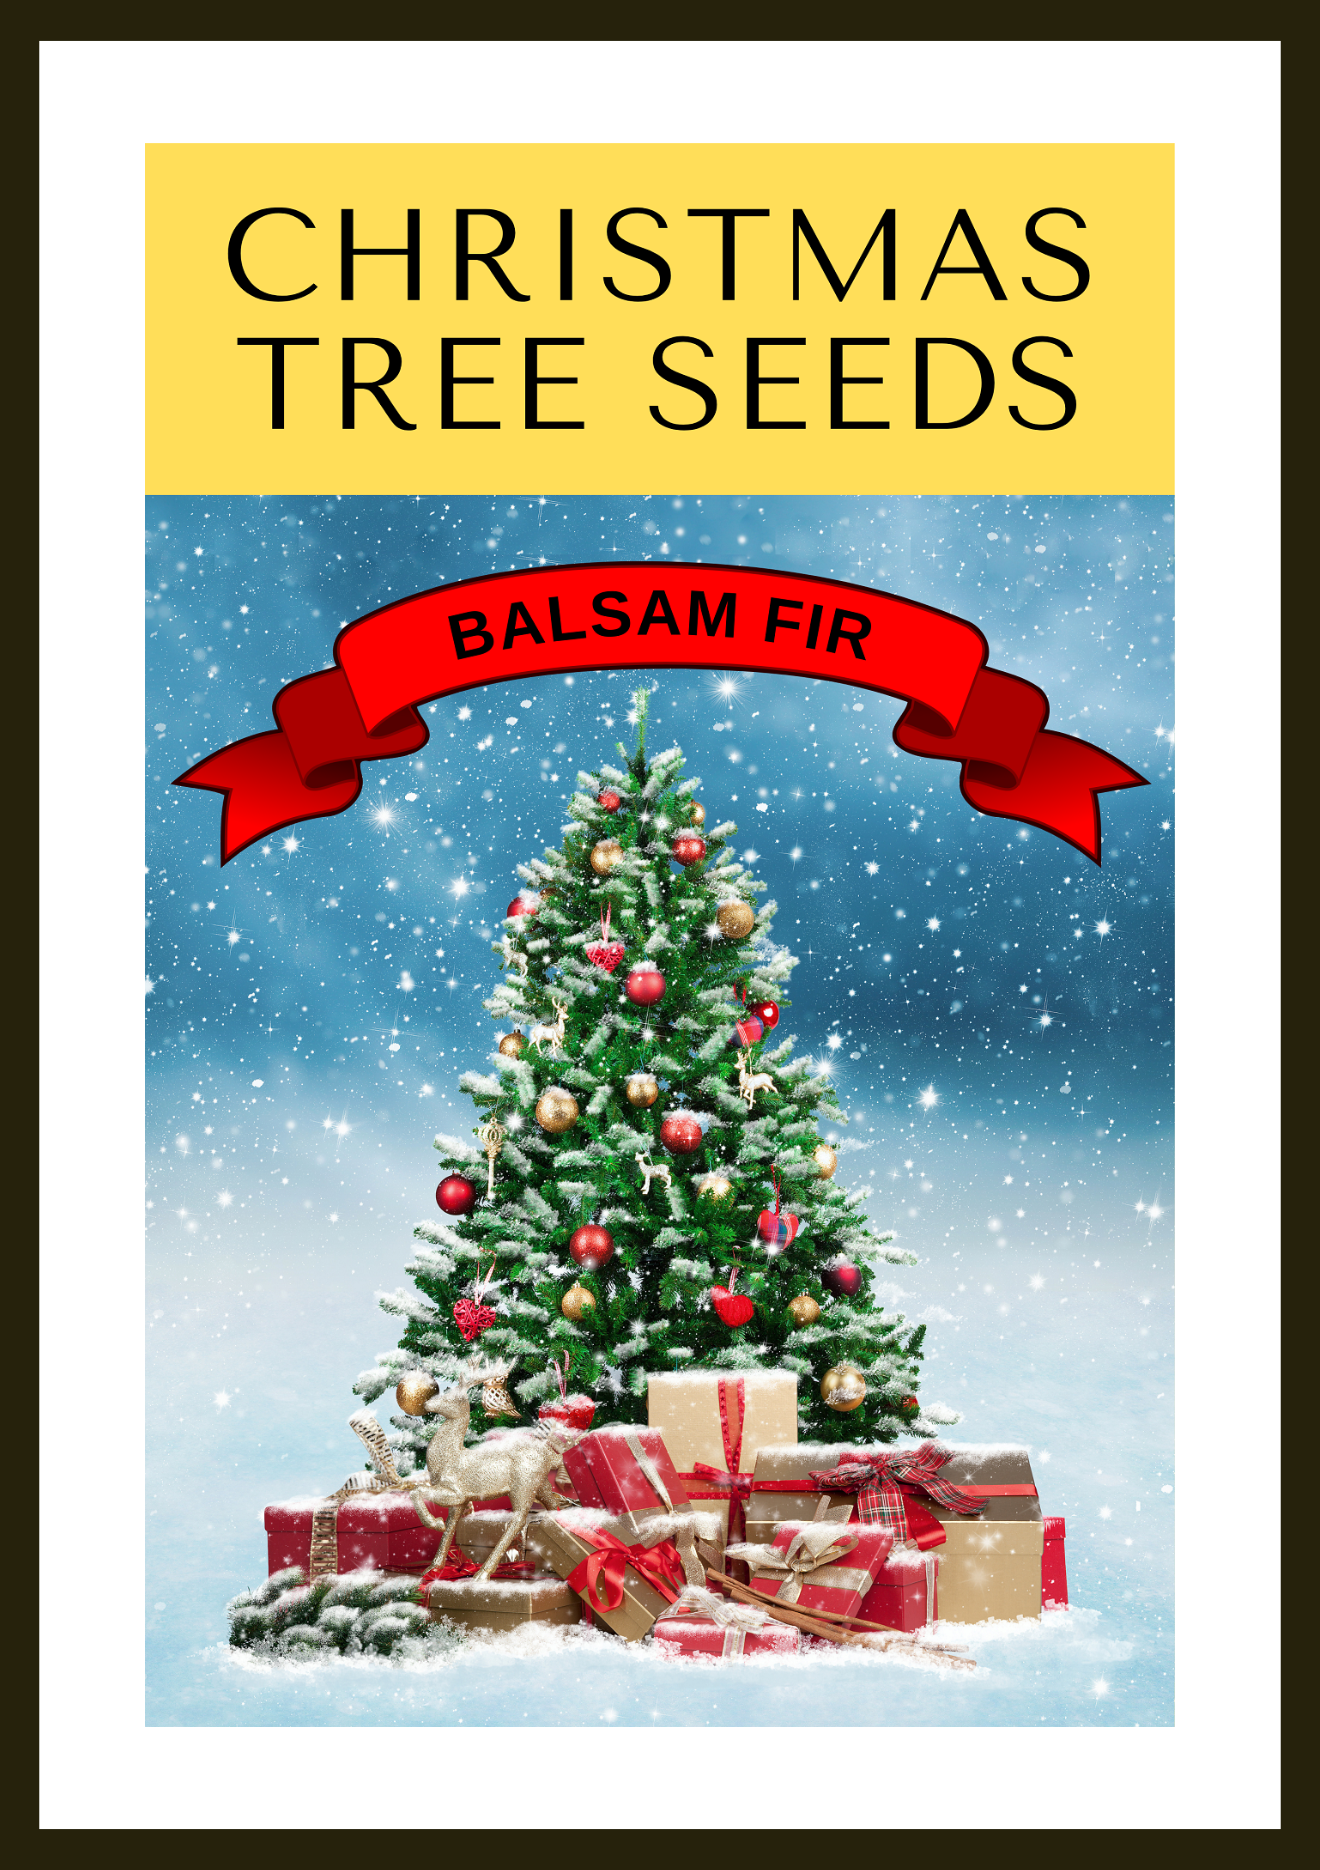 Grow Your Own CHRISTMAS TREE - Balsam Fir ( Abies Balsamea ) Gift Packet of Tree Seeds